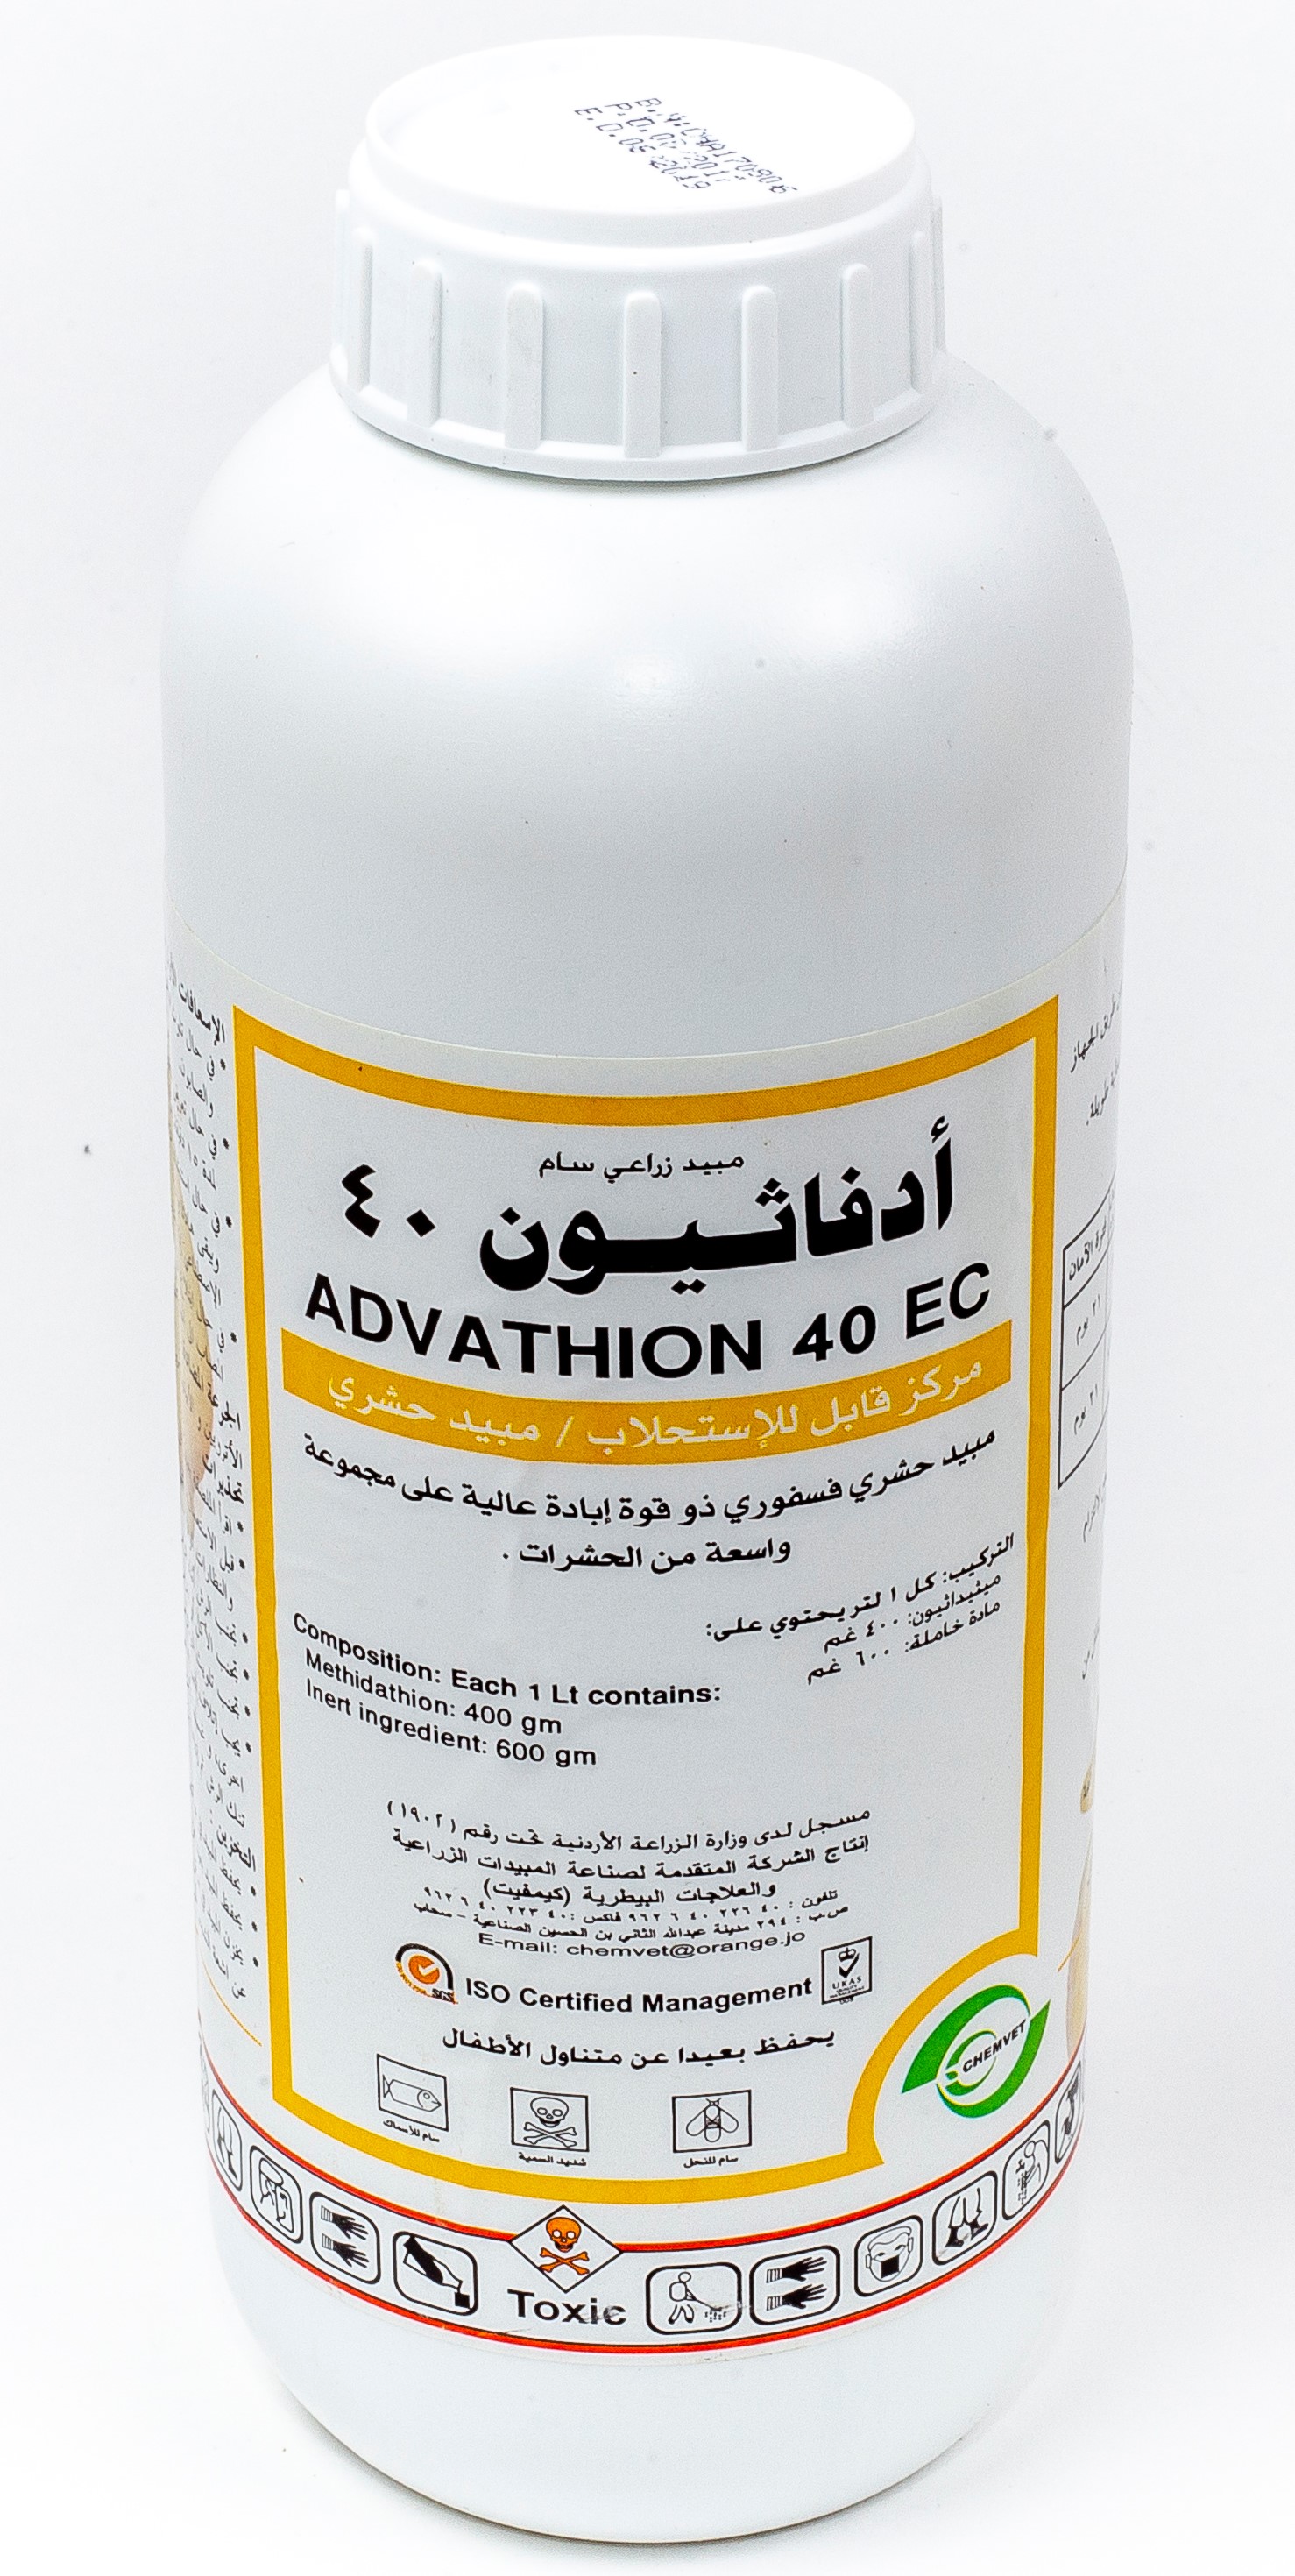 Advathion 40 EC